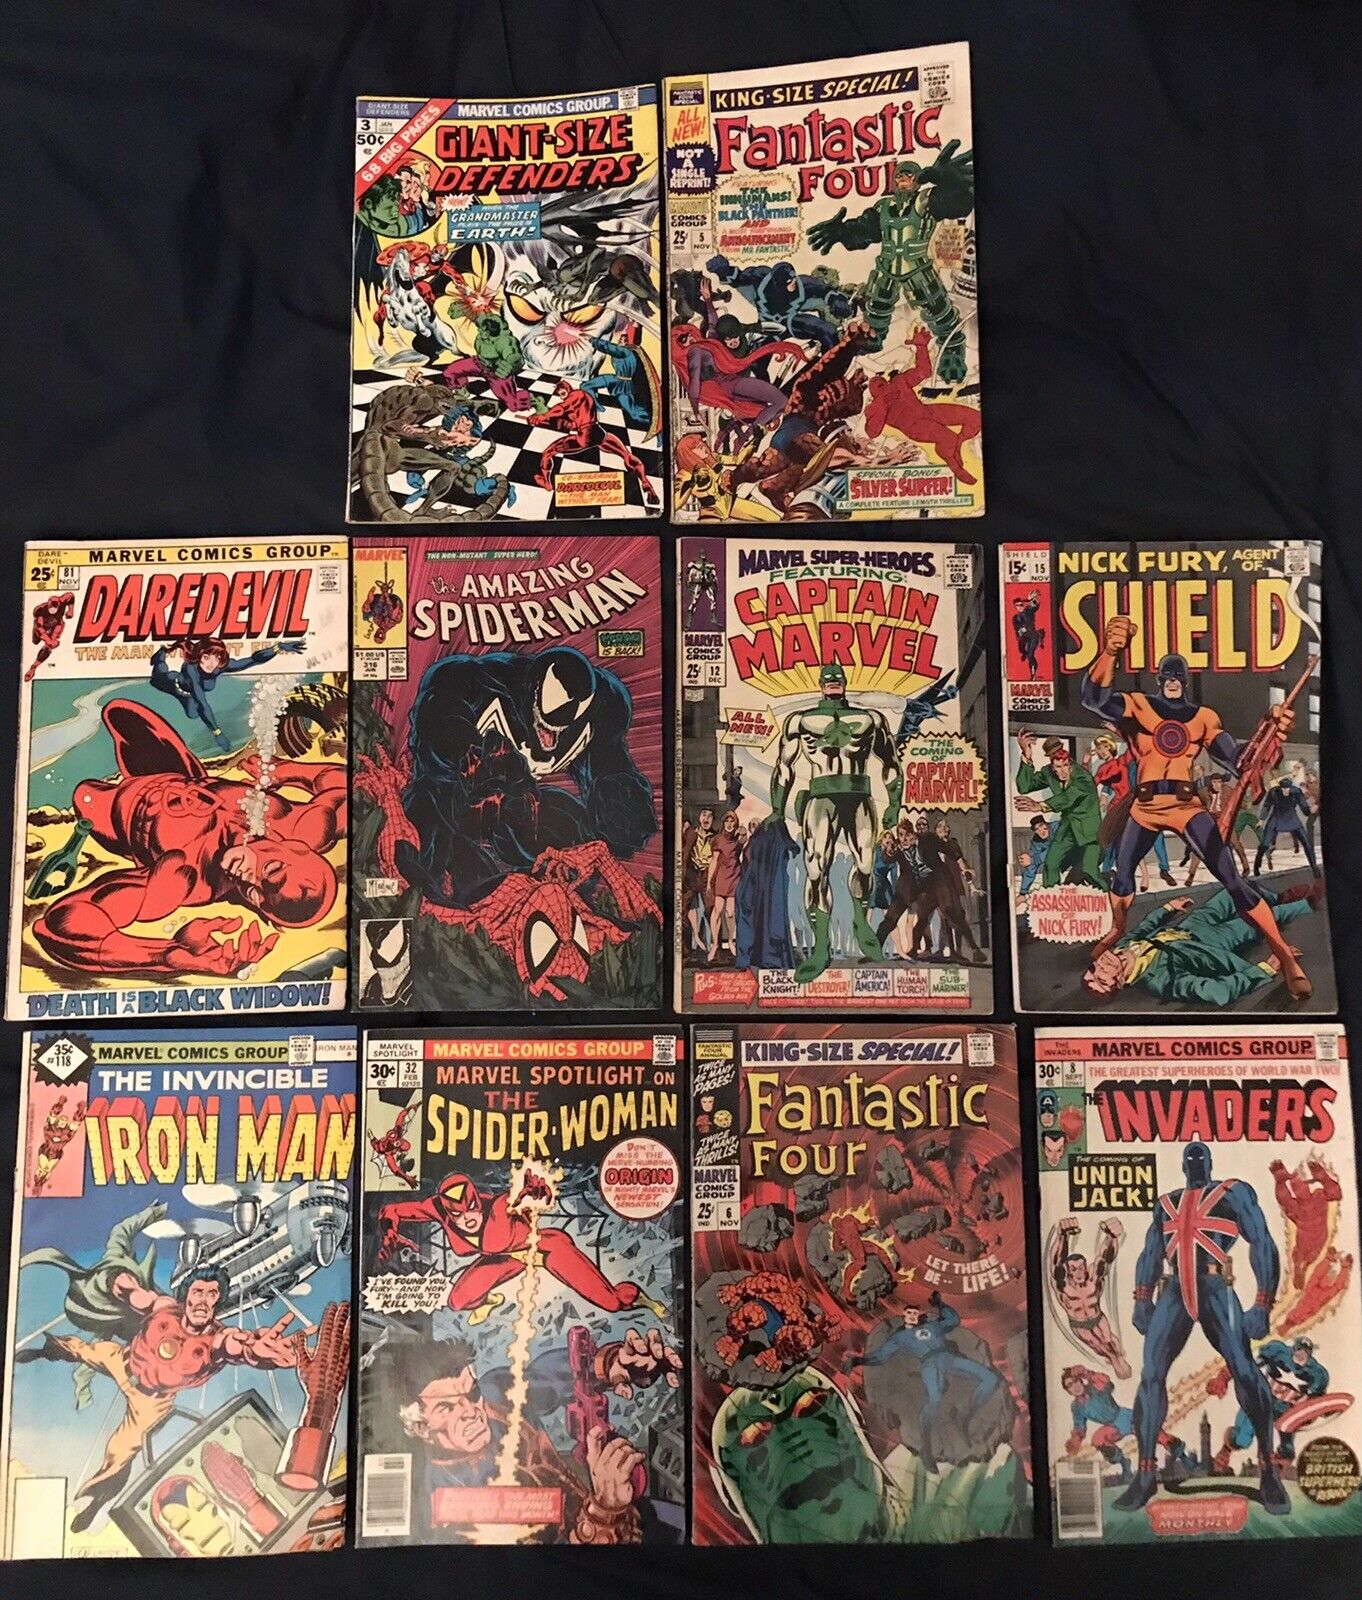 HUGE MARVEL lot of 10 KEY comics Amazing Spider-Man 316, Fantastic Four Annual 6